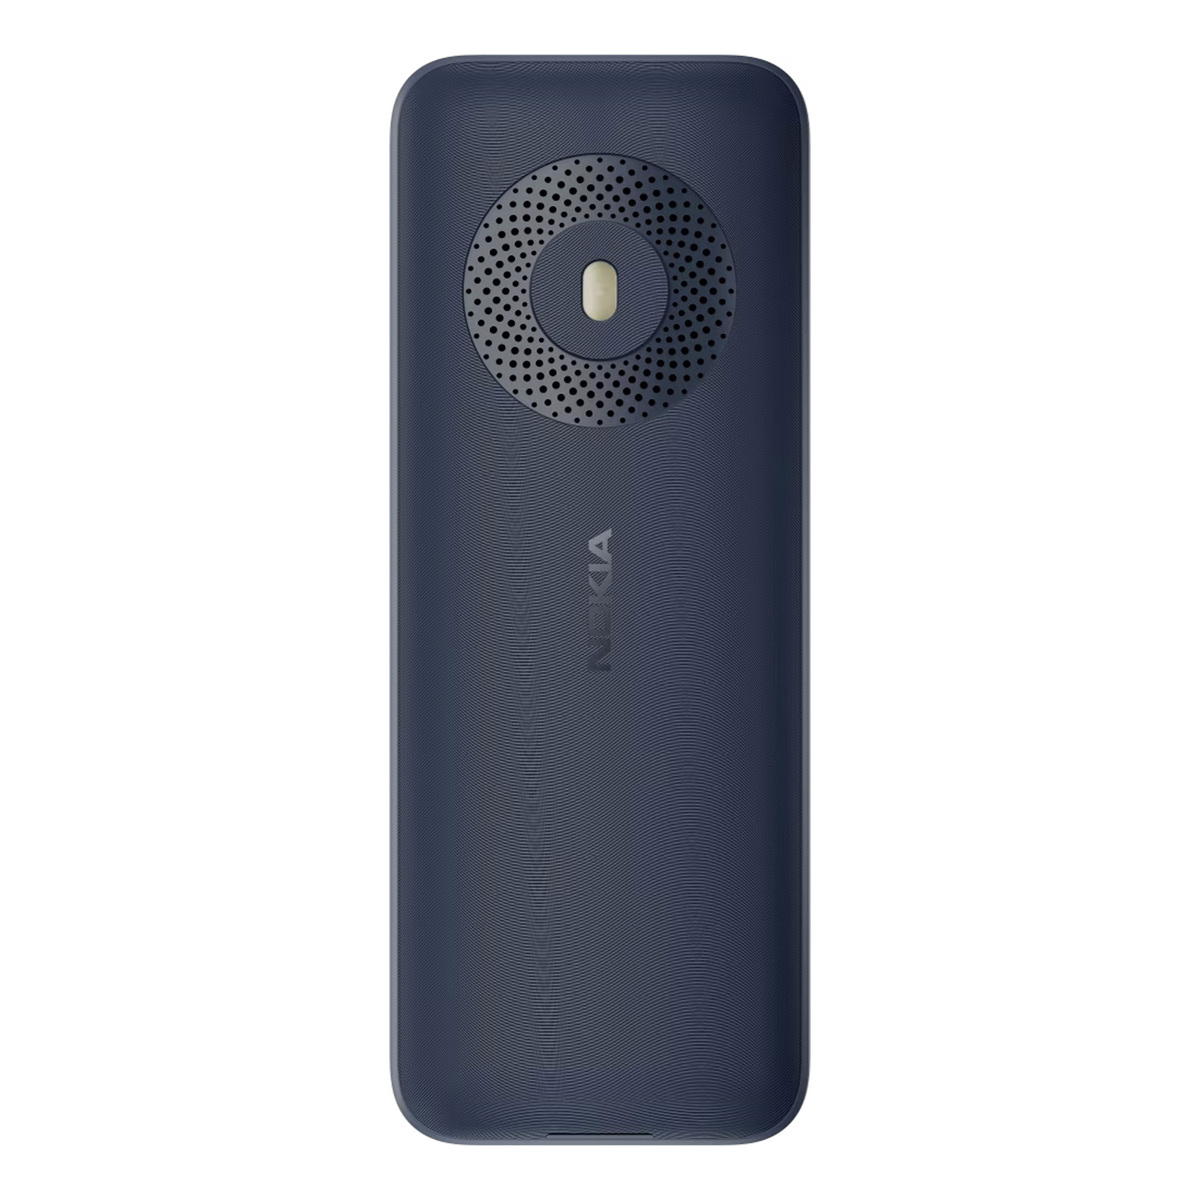 Nokia 130 M Dual SIM Feature Phone, Dark Blue, TA-1576